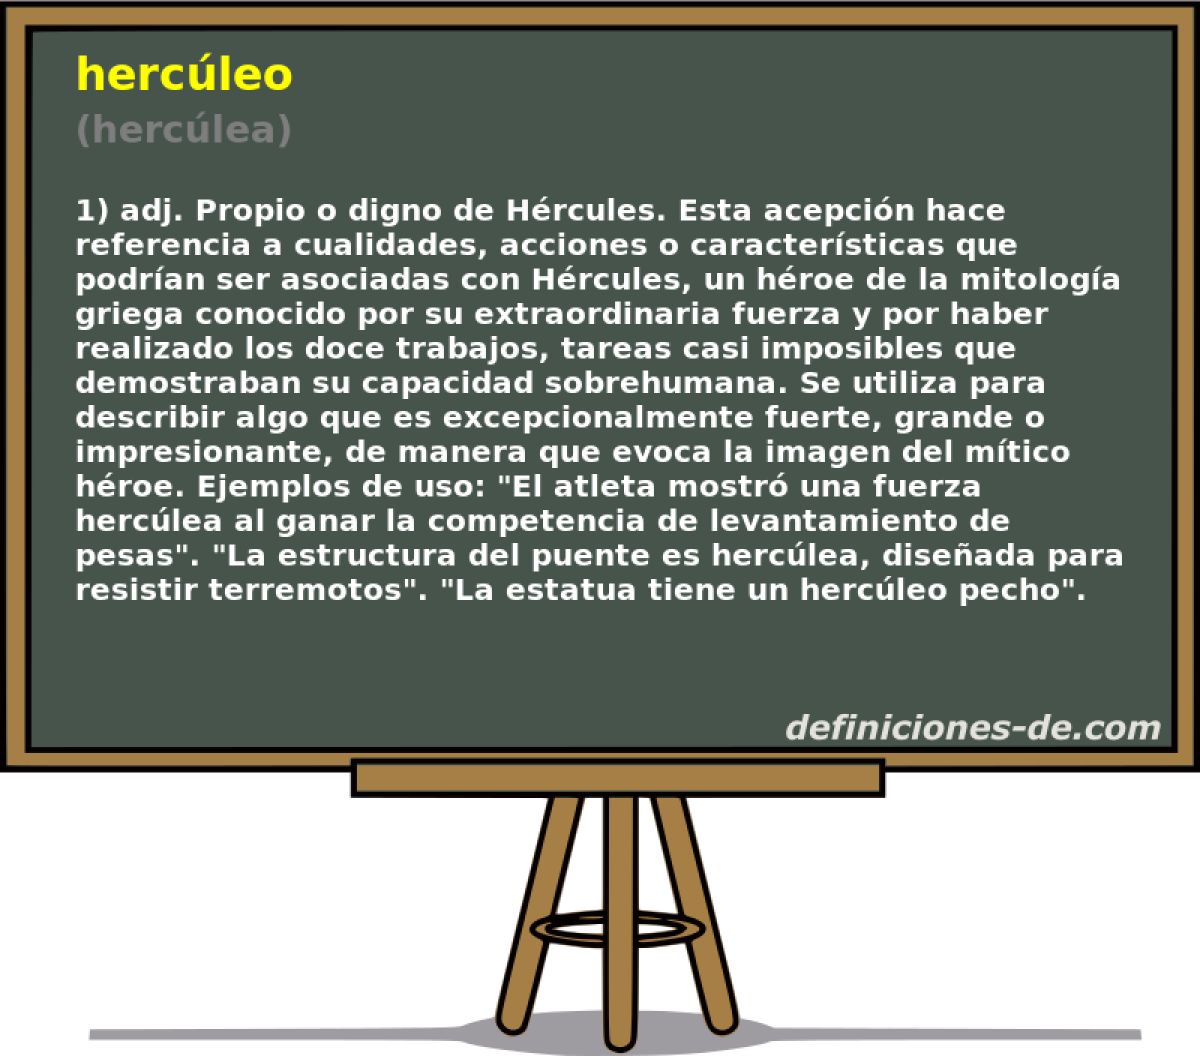 hercleo (herclea)